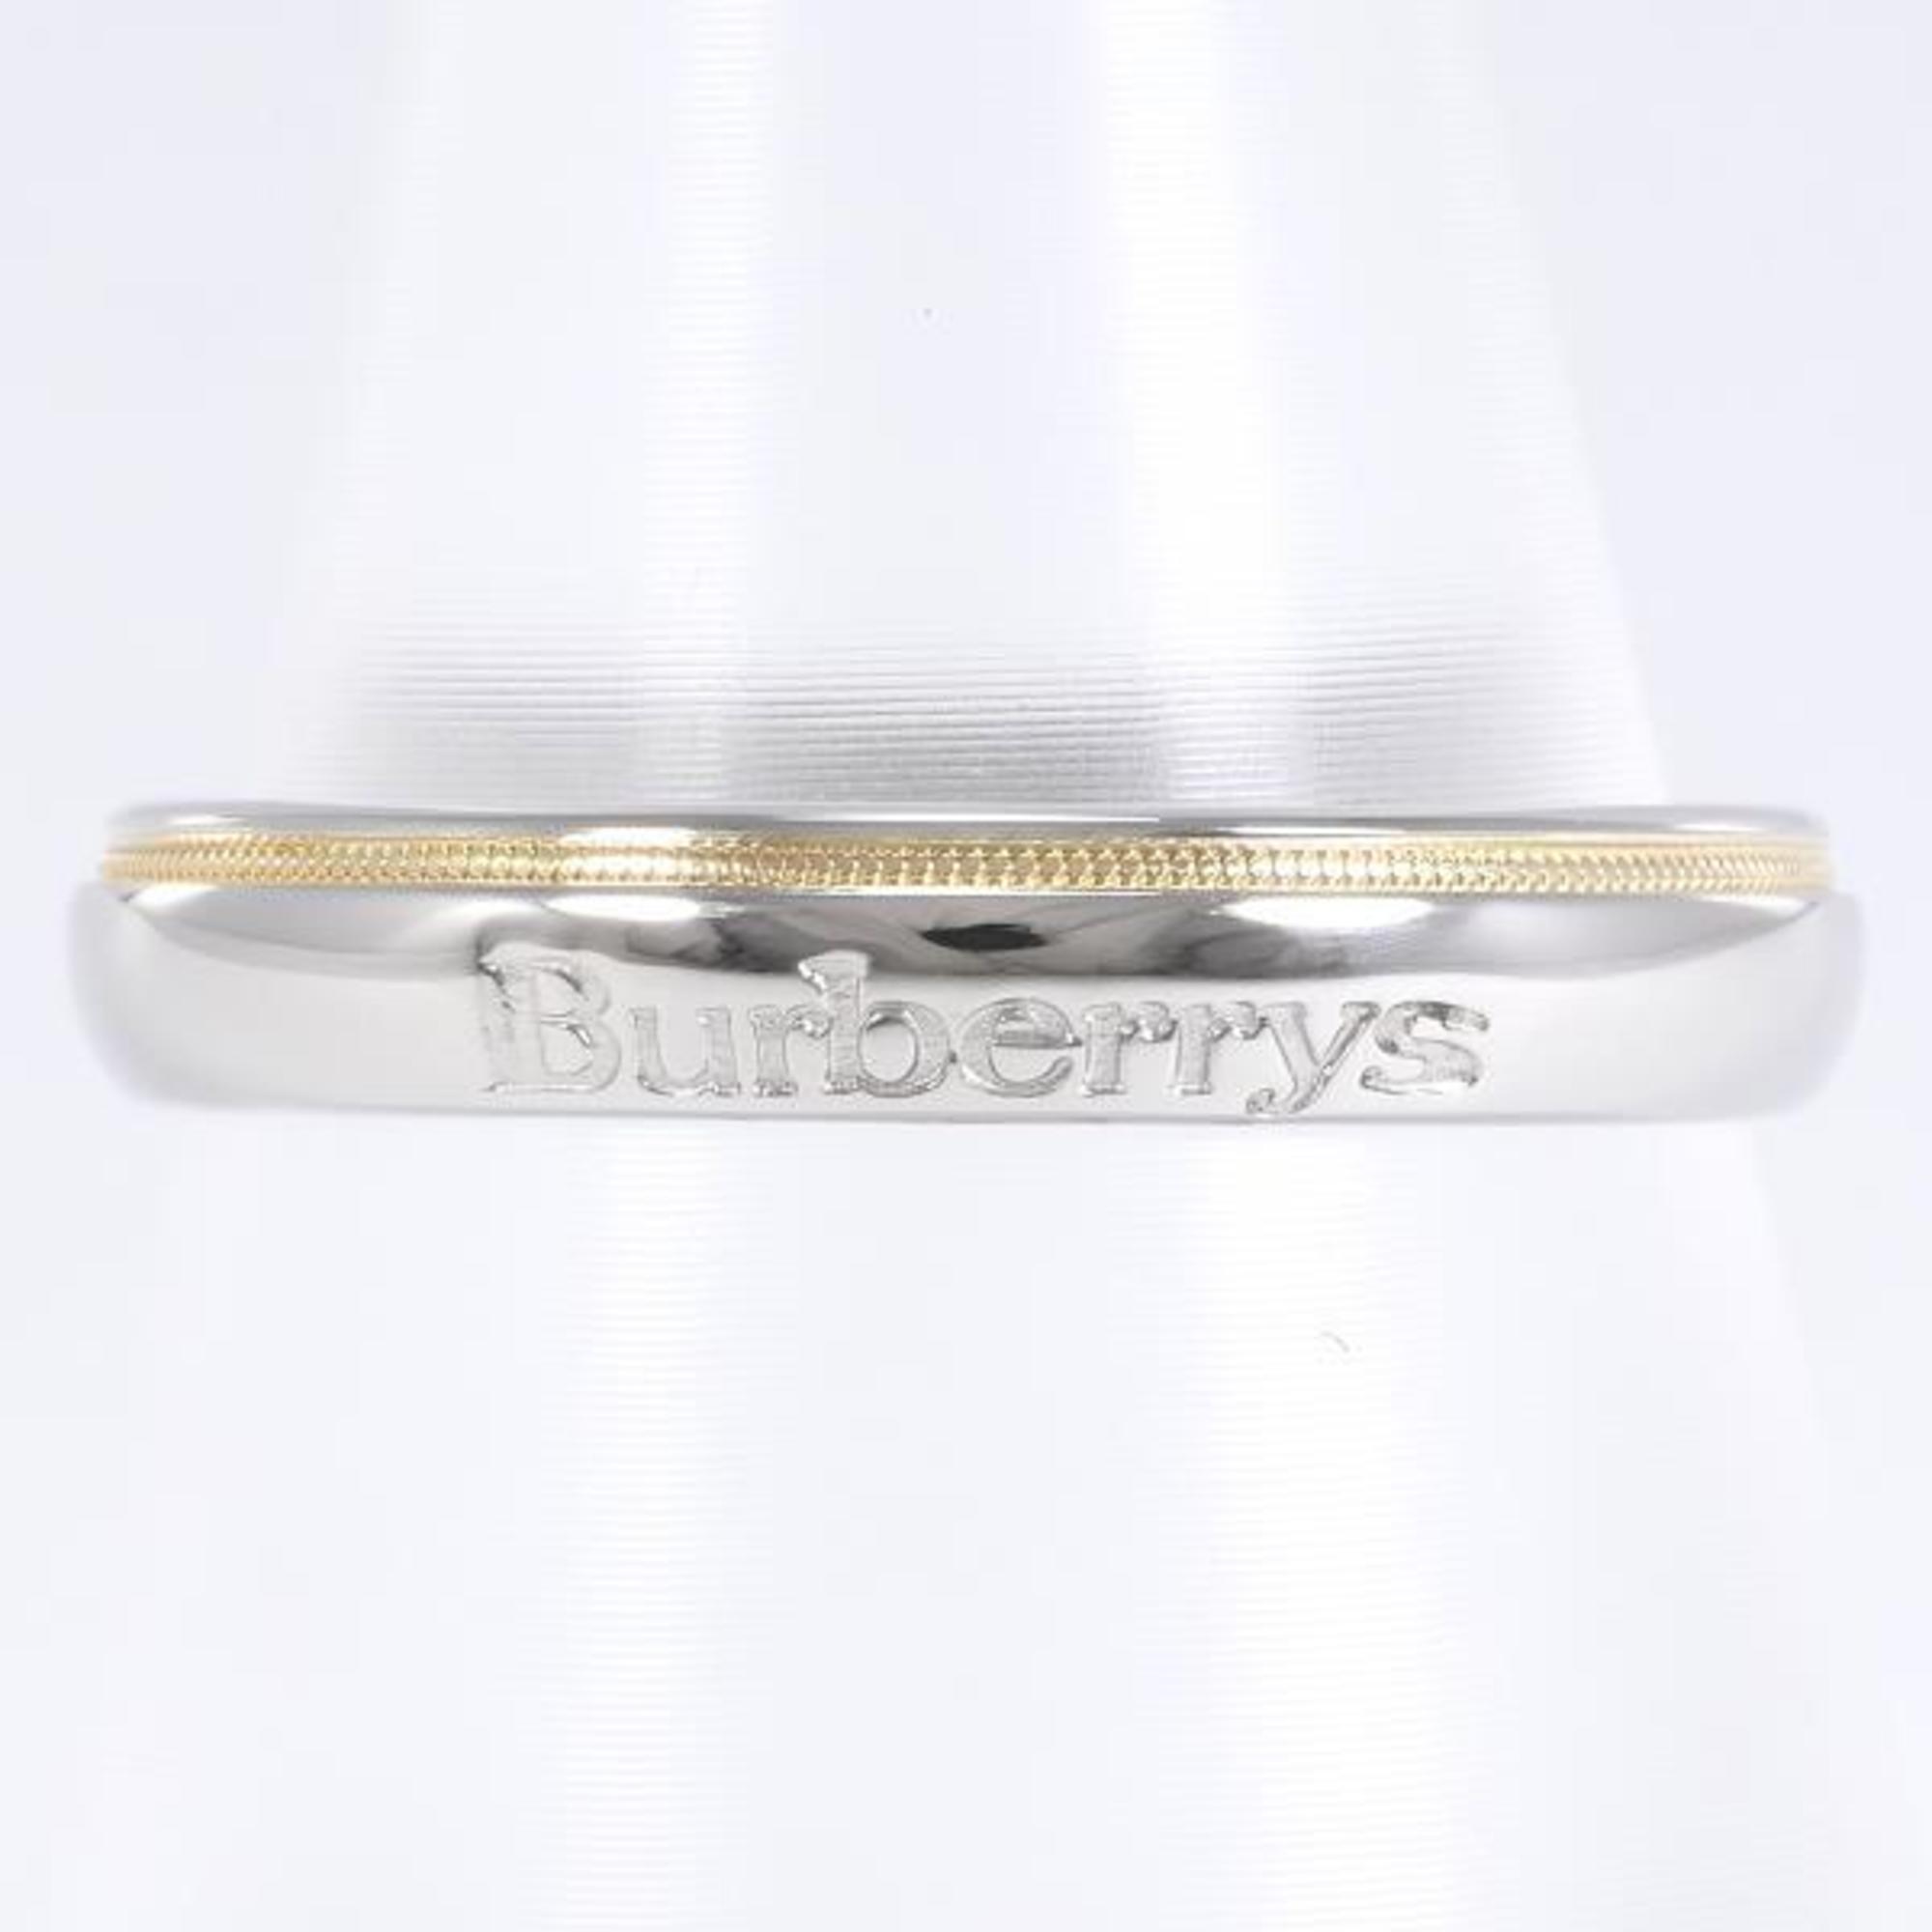 Burberry Silver Logo Ring